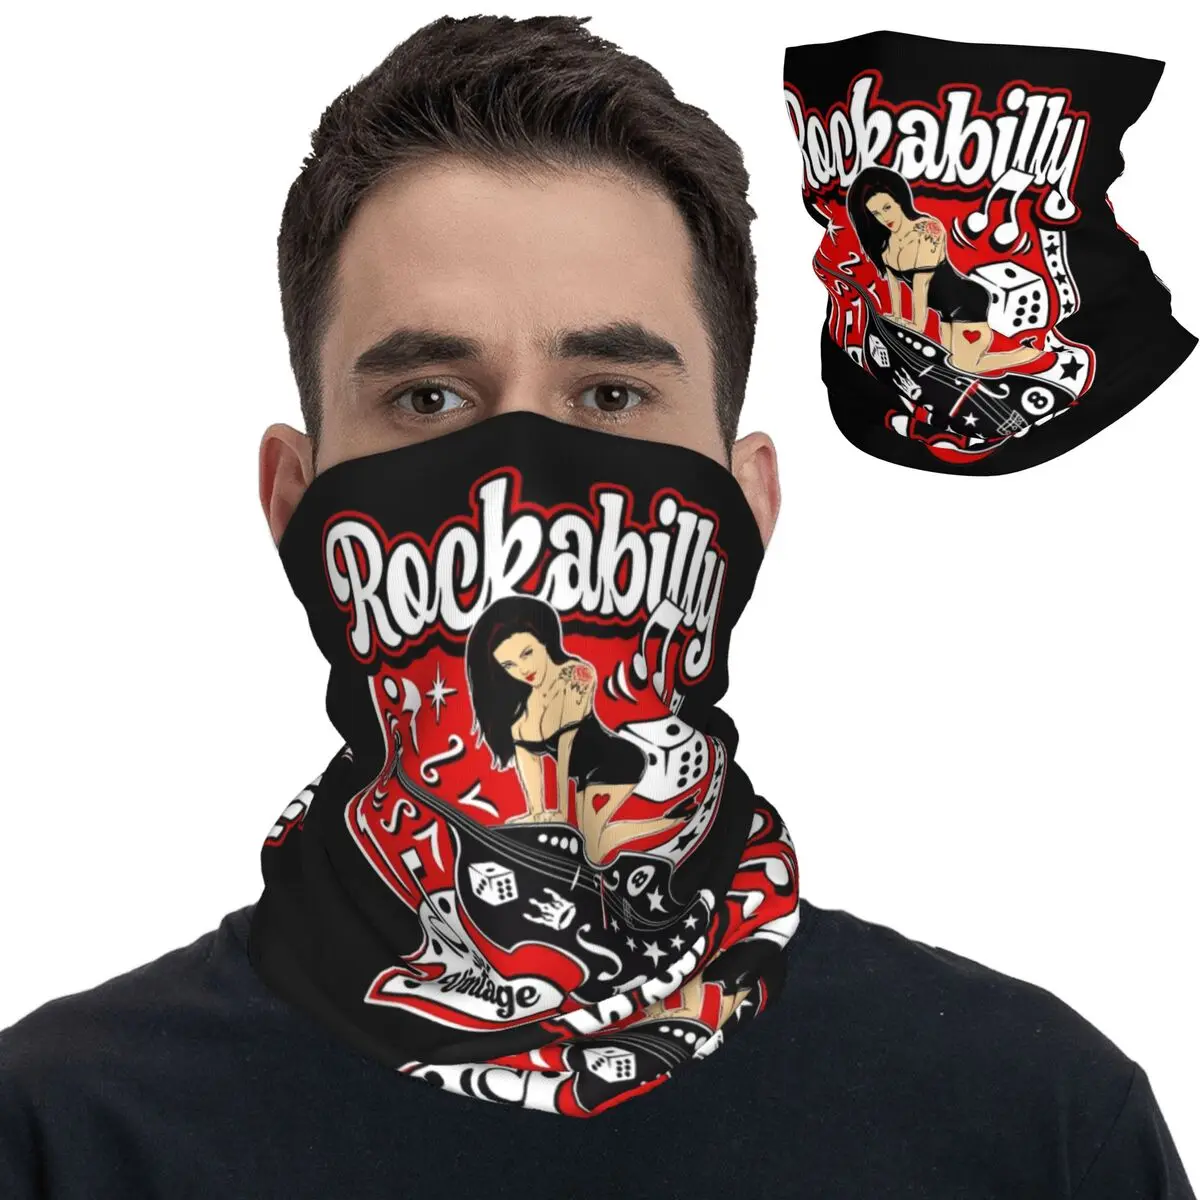 

Rockabilly Pin Up Hop Rocker Bandana Neck Cover Rock and Roll Music Mask Scarf Warm Headband Cycling Men Women Adult Breathable